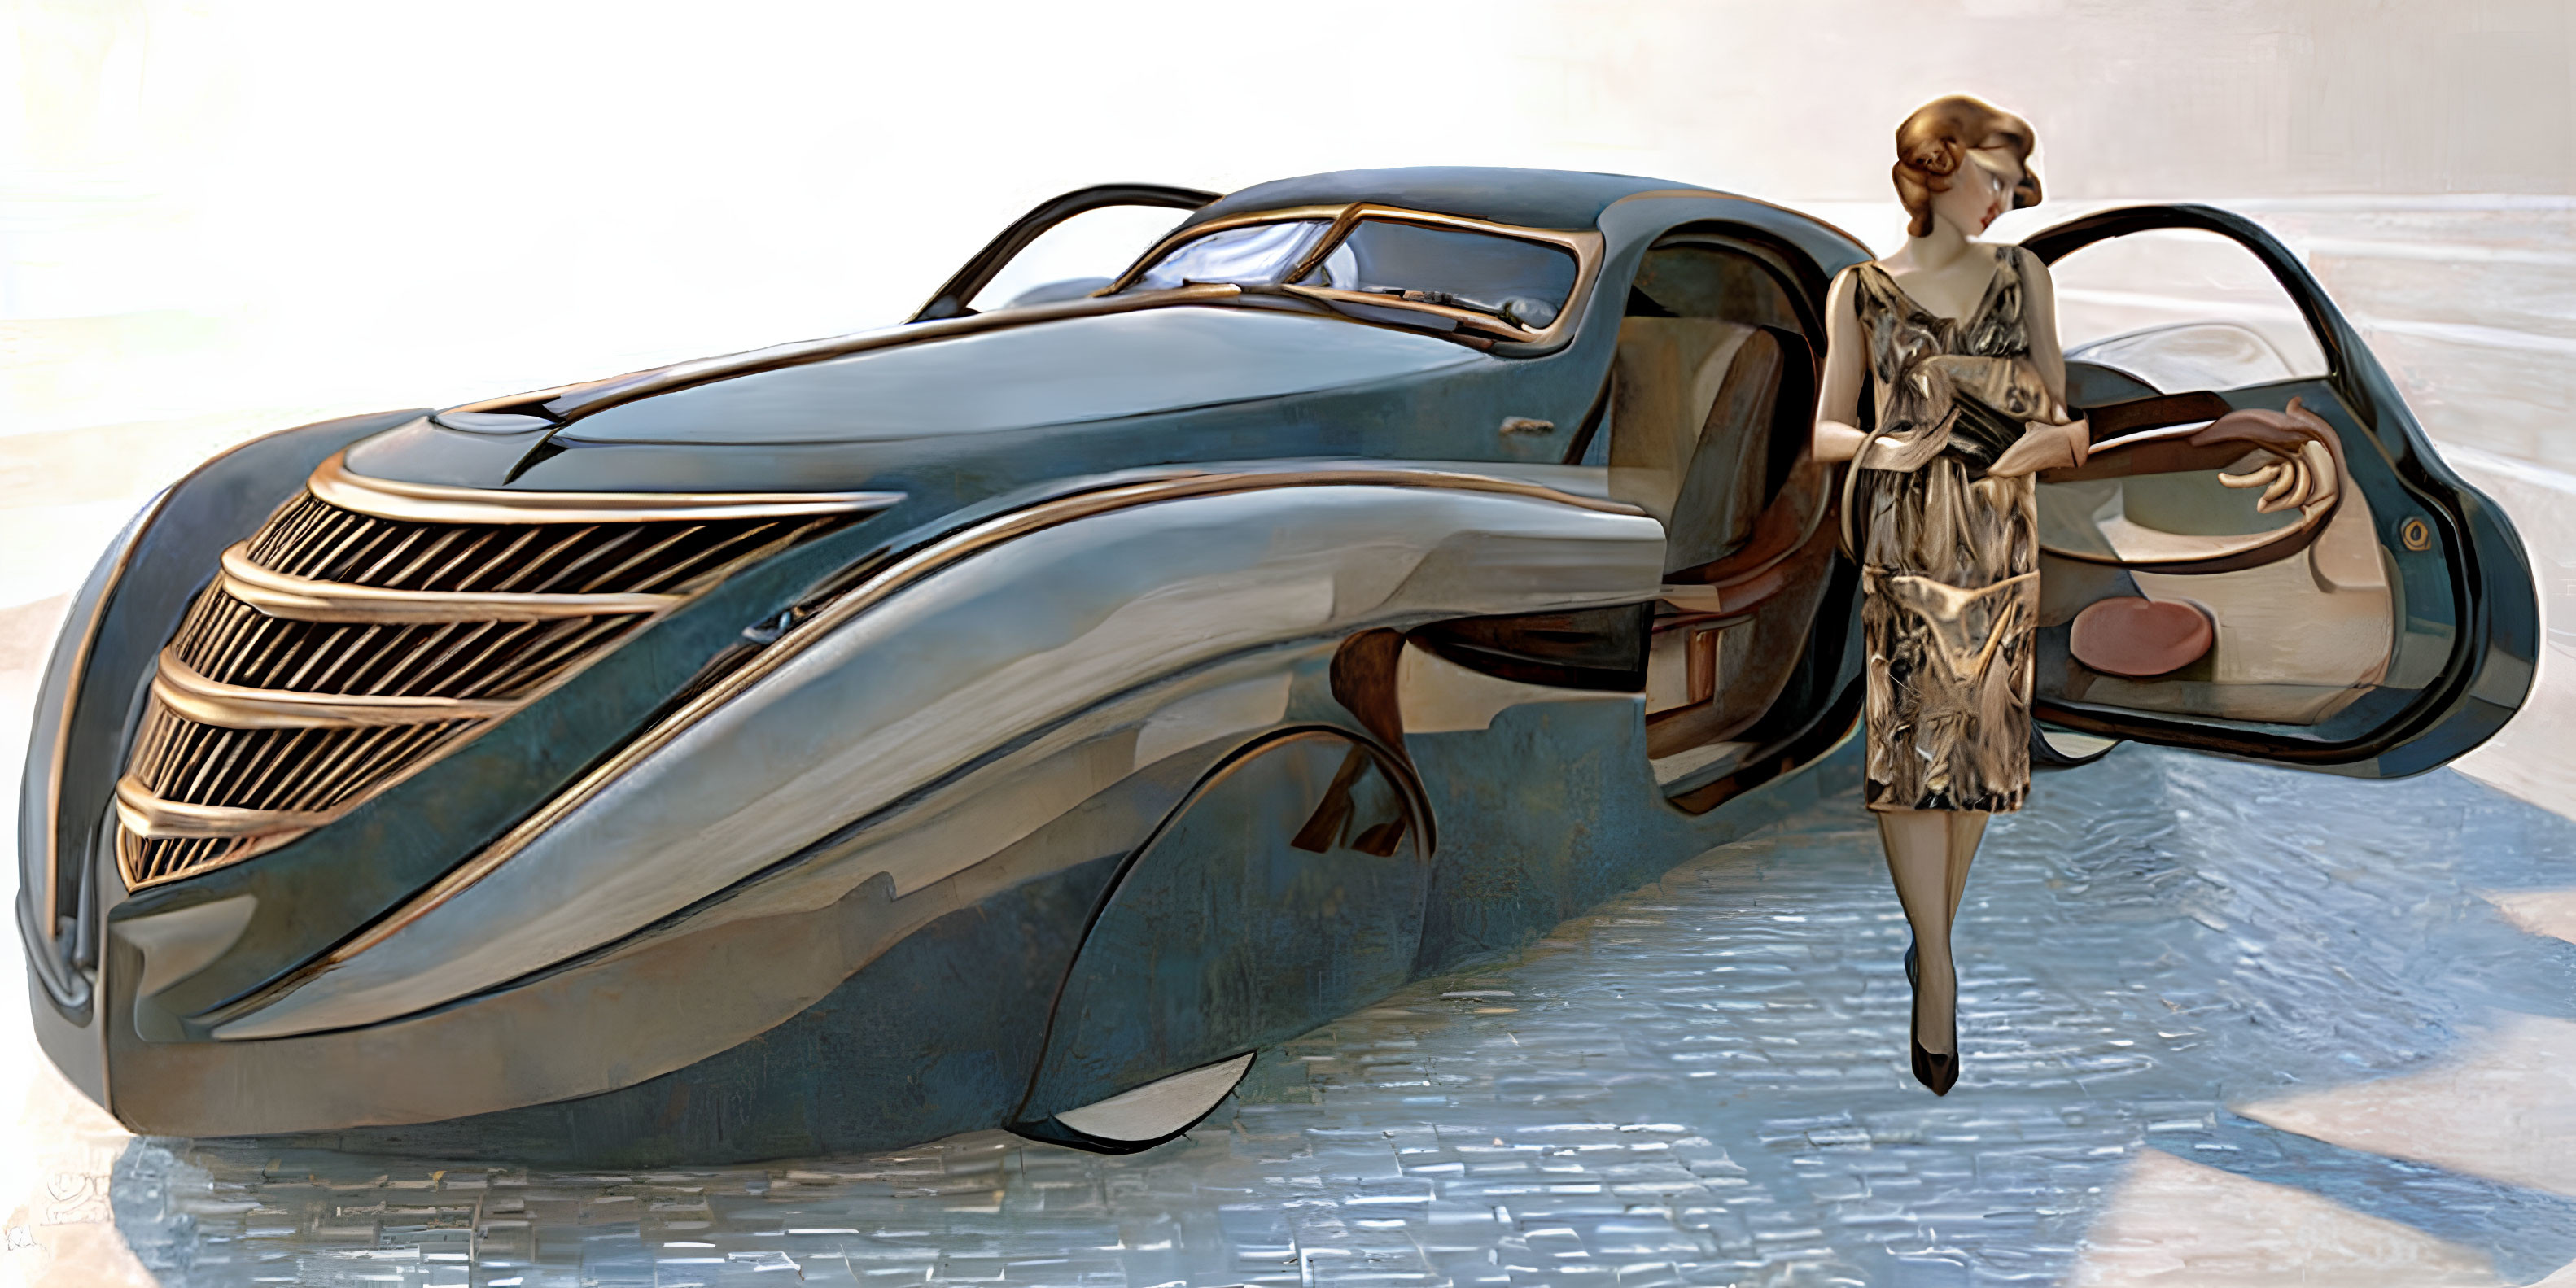 Vintage Attired Woman Exiting Futuristic Art Deco Car on Illuminated Background